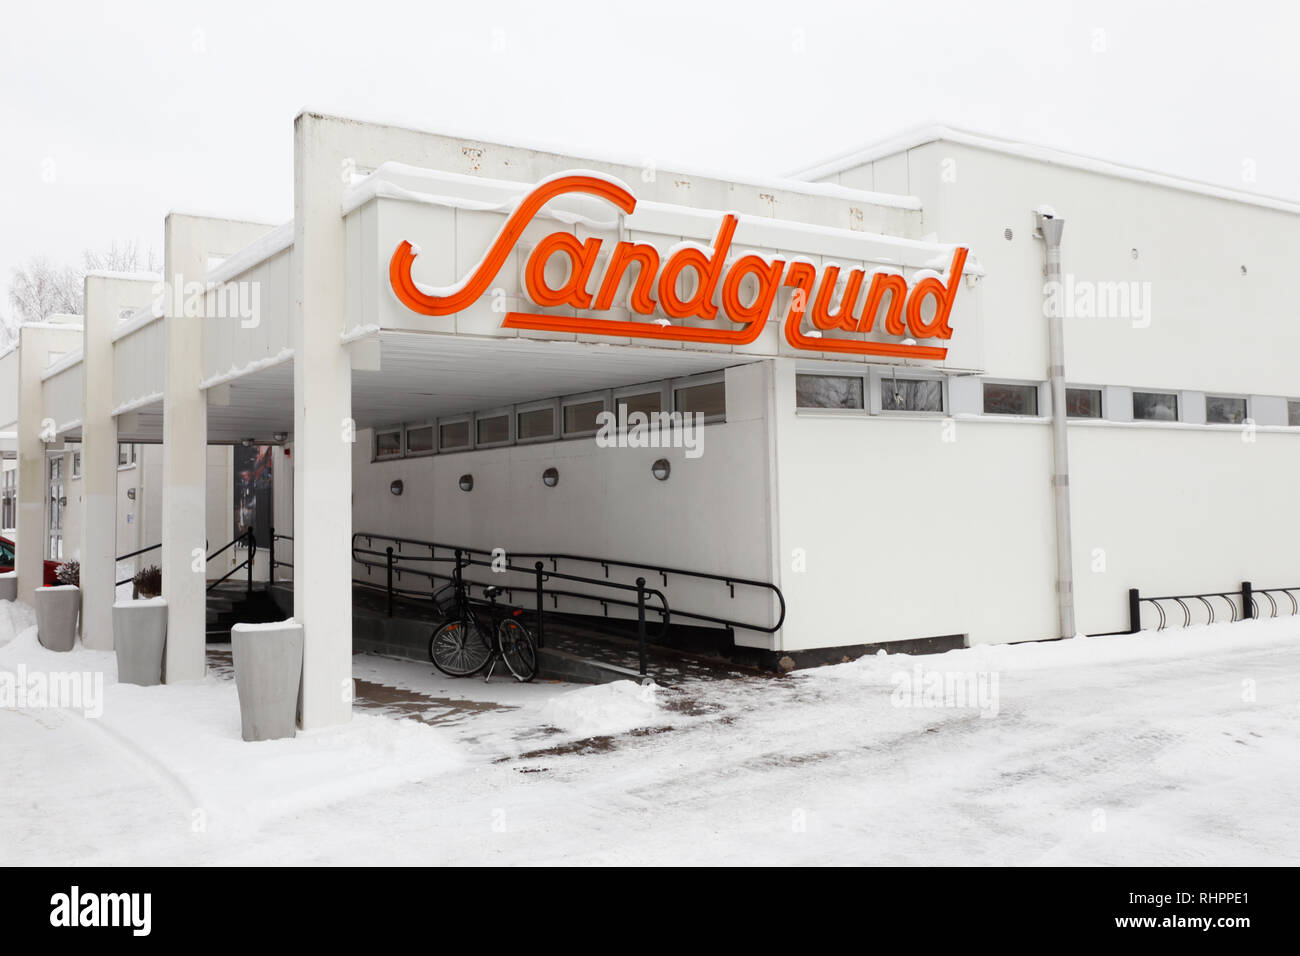 Karlstad, Sweden - January 31, 2019: The Sandgrund building containg the Lars Lerin museum. Stock Photo